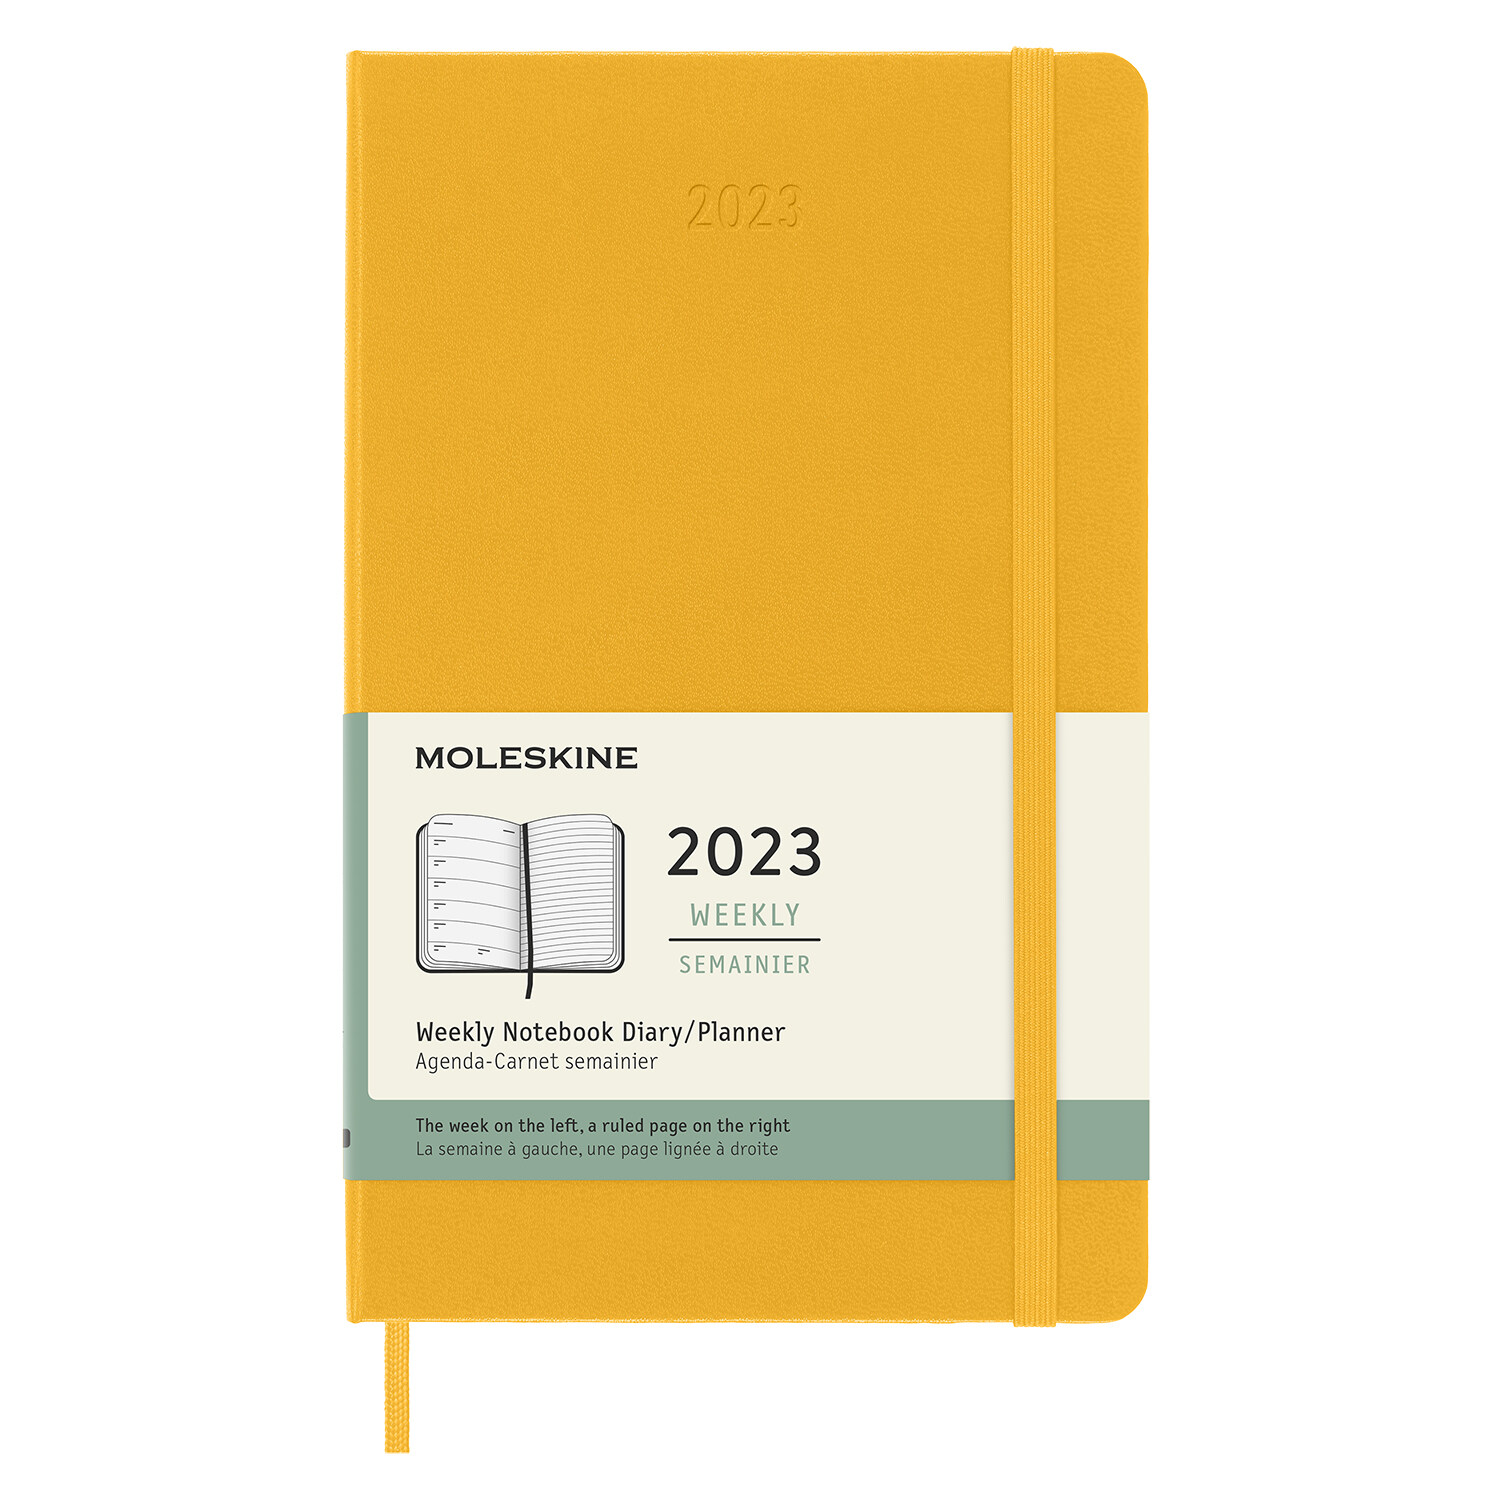 Moleskine 2023 Weekly Notebook Planner, 12m, Large, Orange Yellow, Hard (5 X 8.25) (Other)